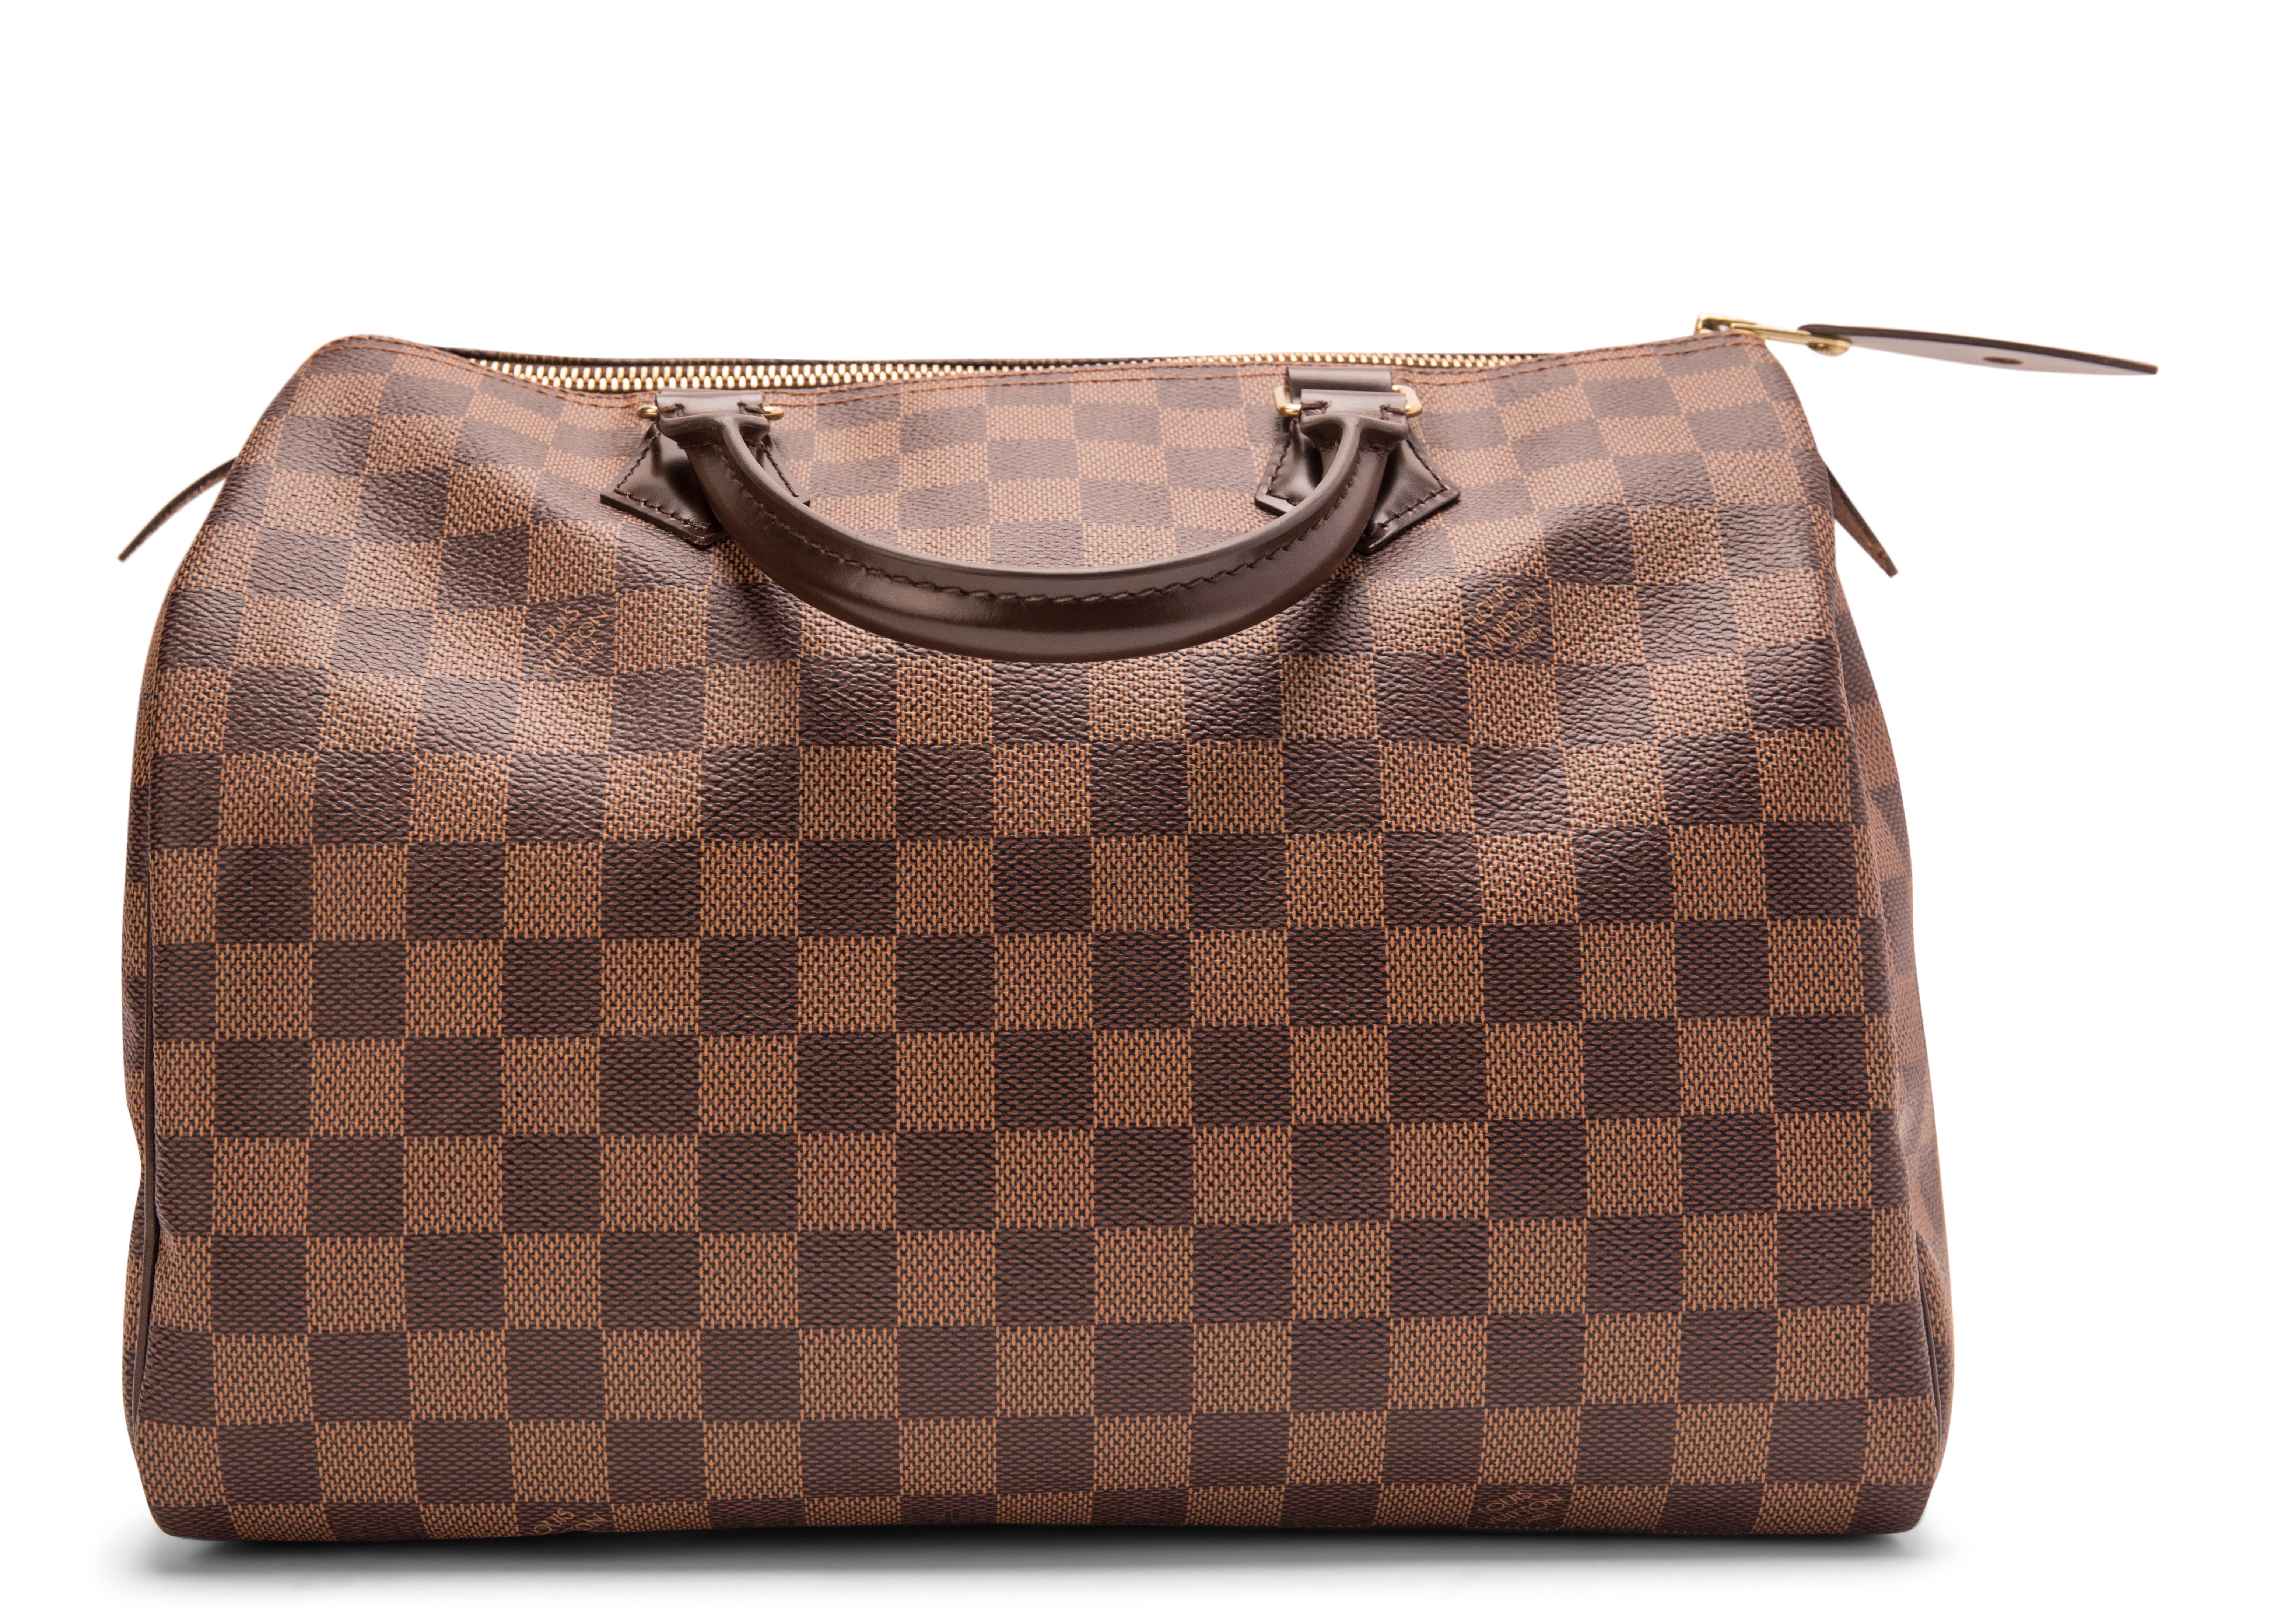 Louis Vuitton Speedy Damier Ebene (Without Accessories) 30 Brown | StockX